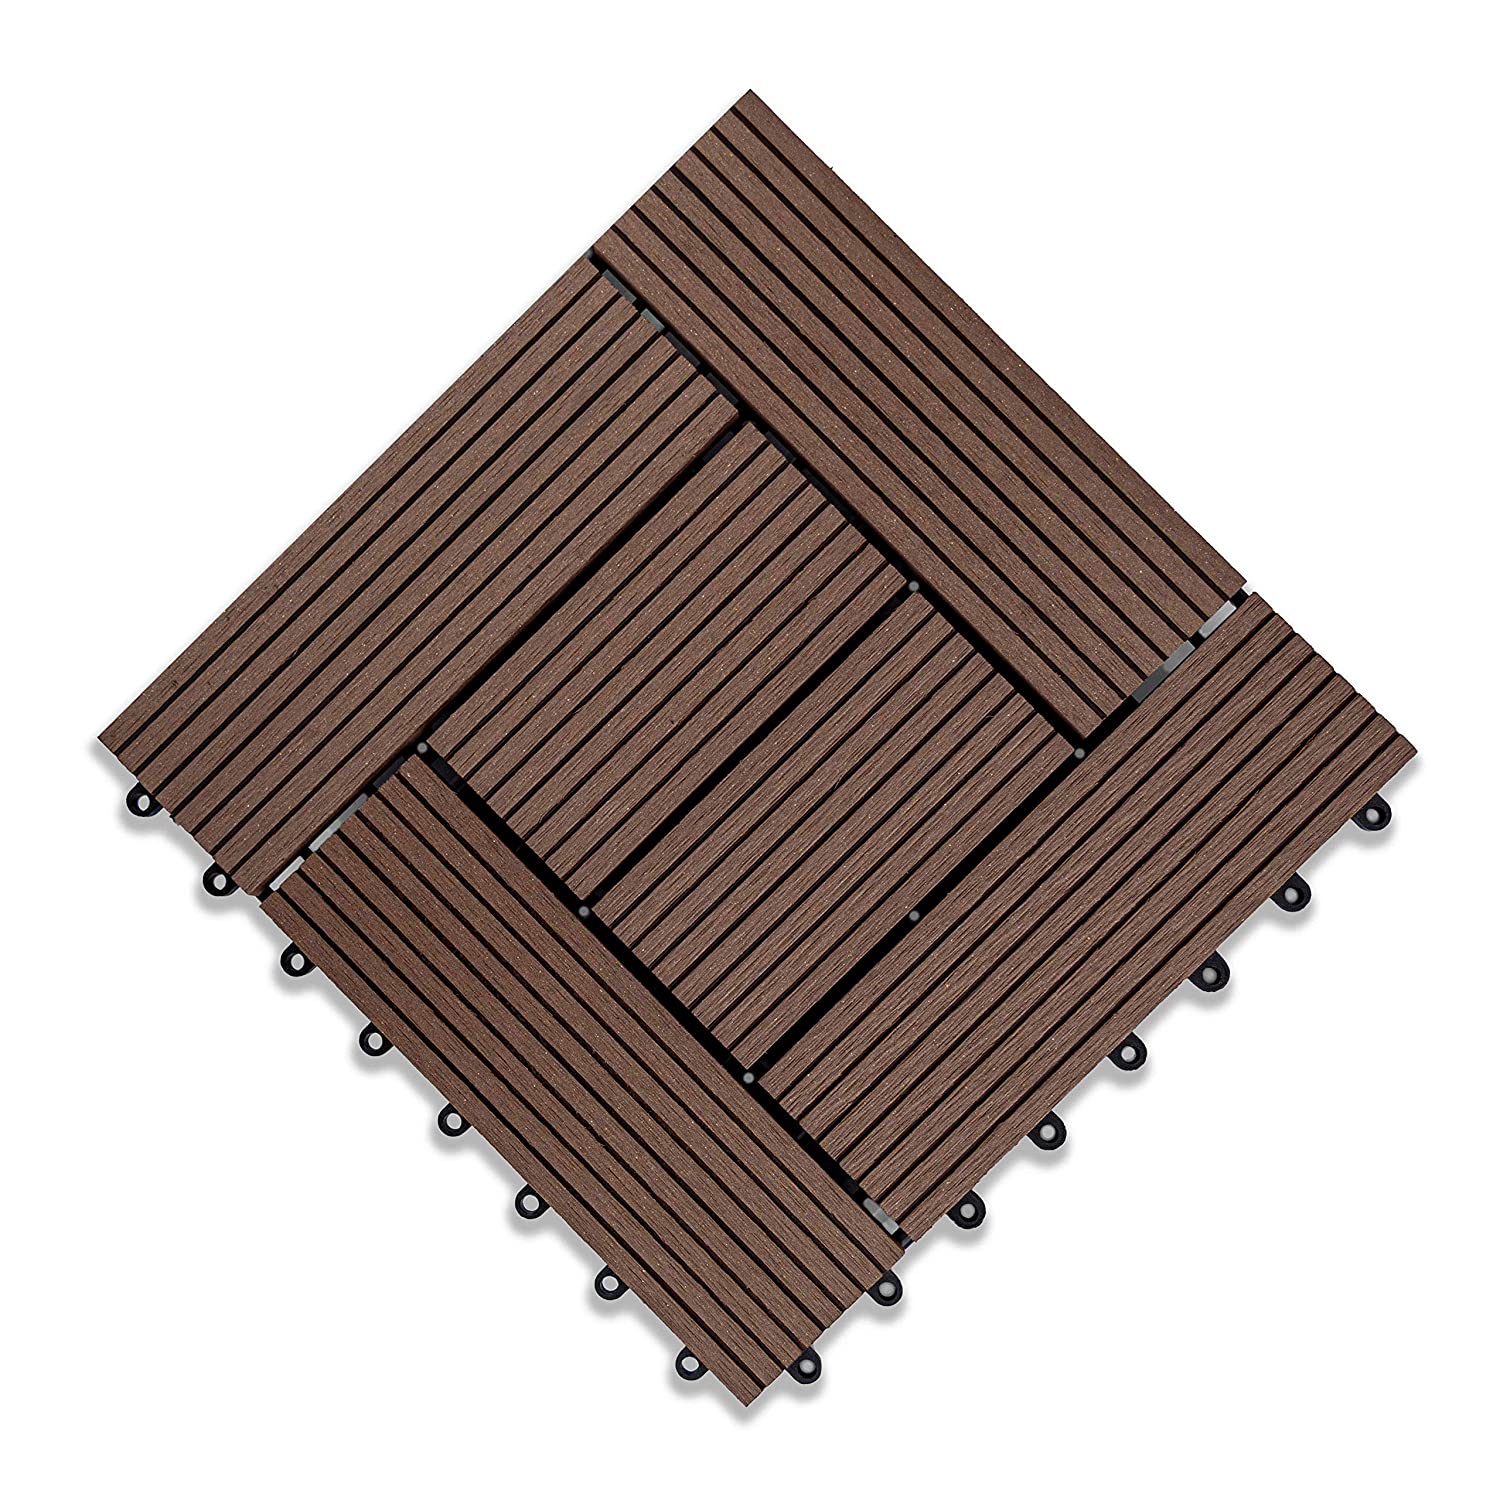 Rosetta- Interlocking Deck Tiles Waterproof Outdoor Flooring- Coffee 